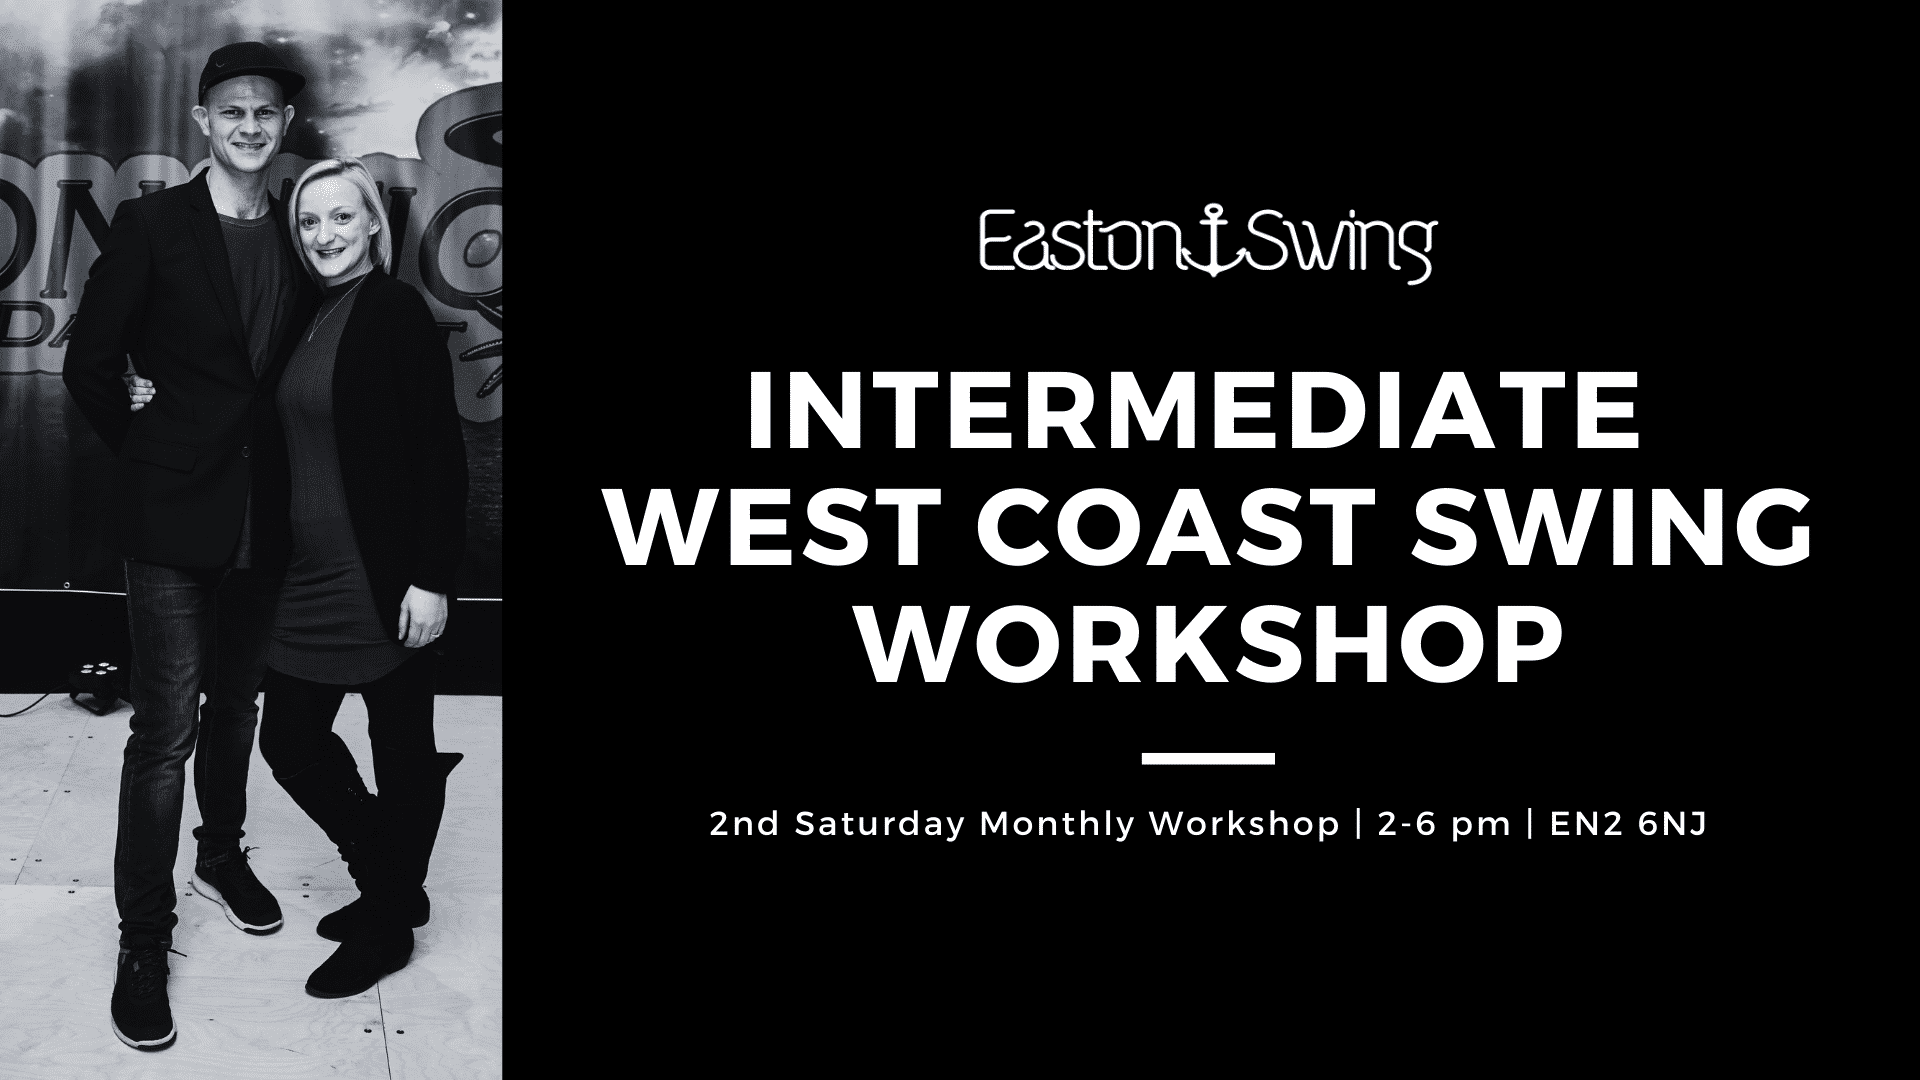 Black & White artwork and text describing an intermediate West Coast Swing workshop.